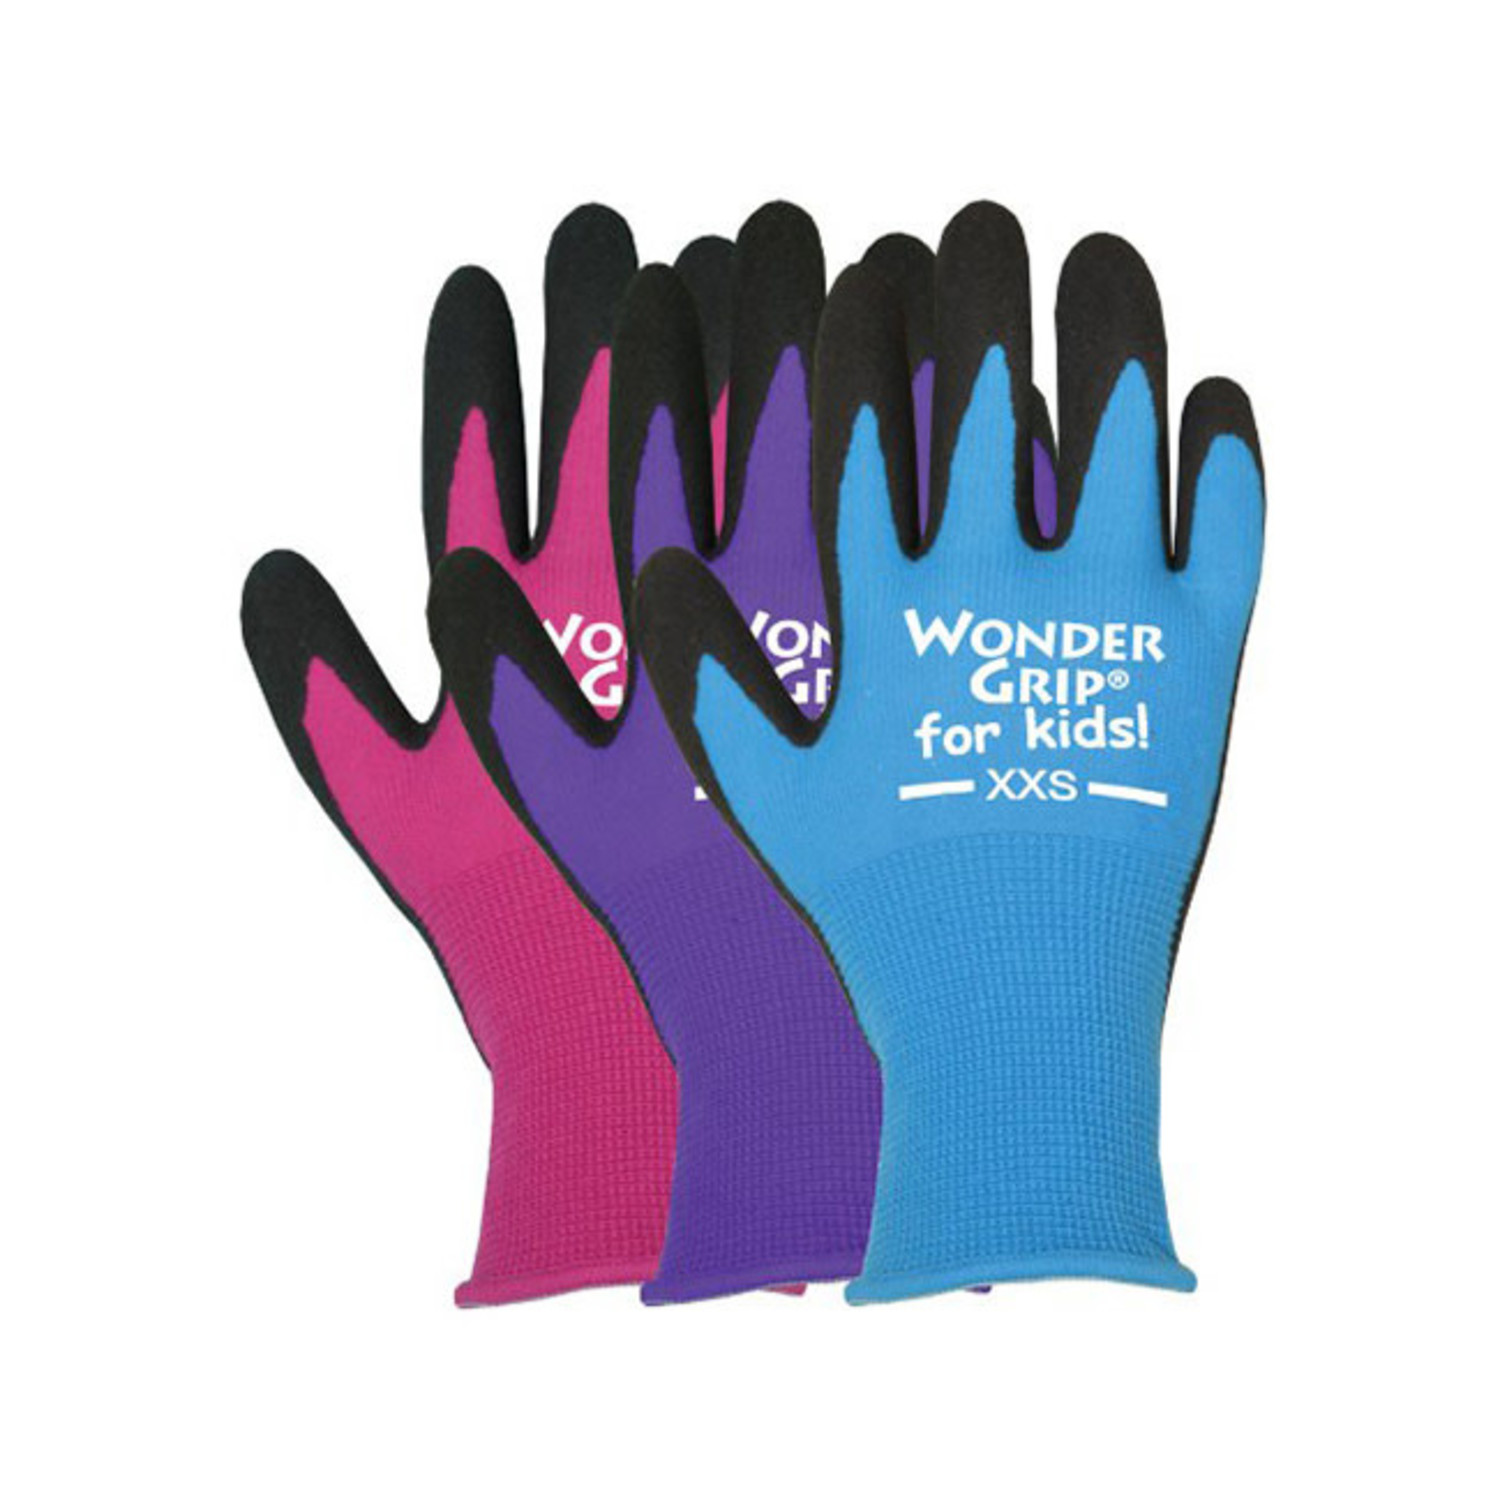 https://cdn.shoplightspeed.com/shops/651173/files/39413245/1500x4000x3/bellingham-glove-company-wonder-grip-gloves-for-ki.jpg